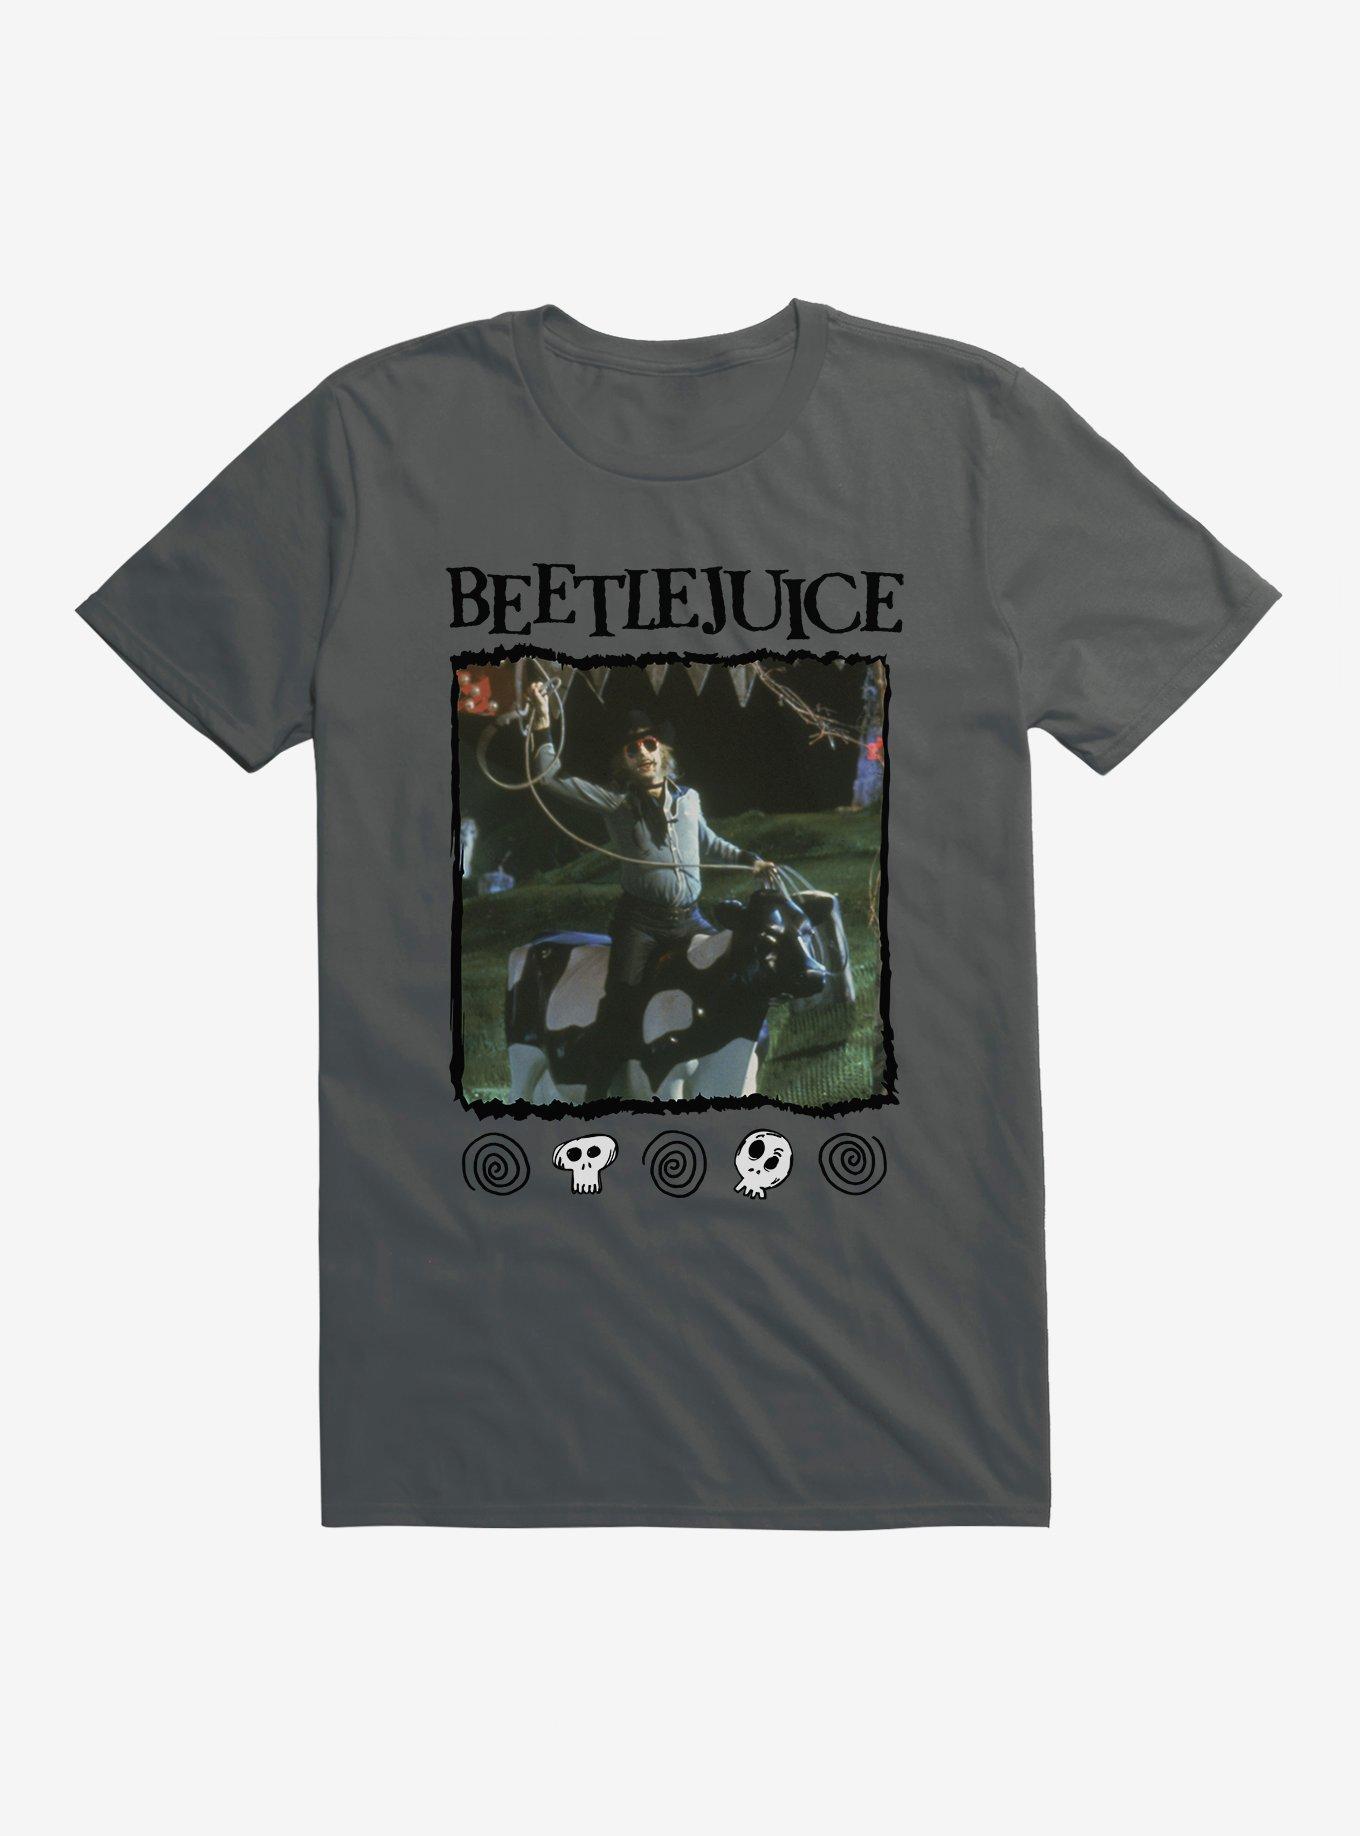 Beetlejuice Cowboy Scene T-Shirt